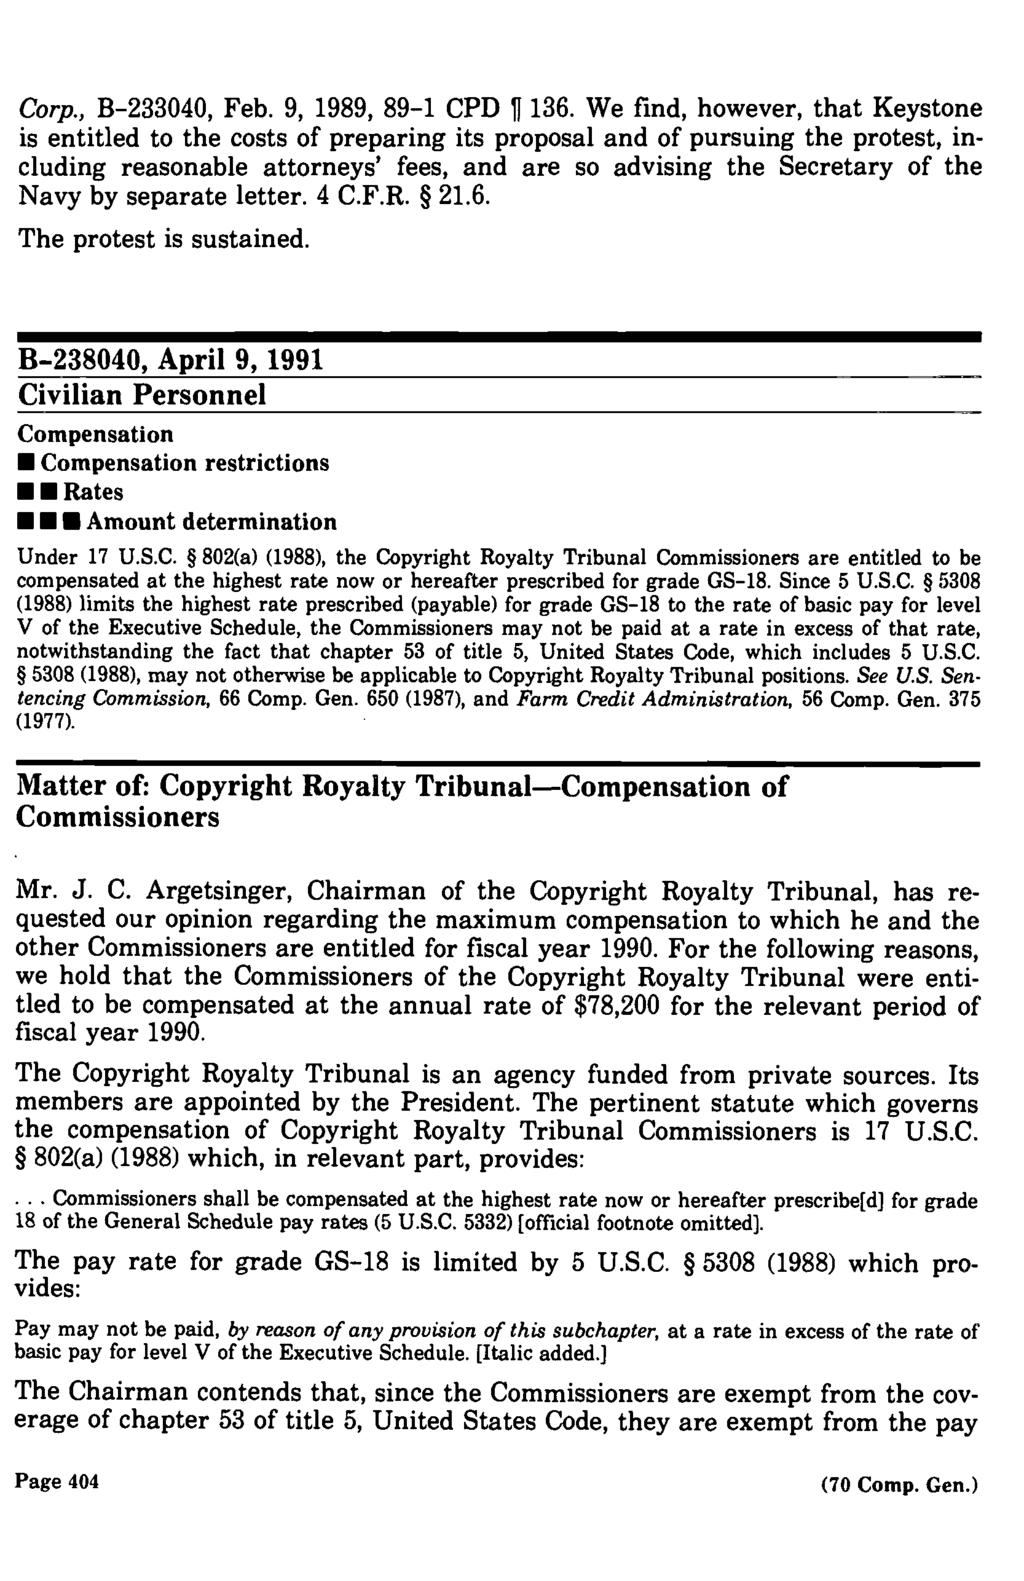 Corp., B 233040, Feb. 9, 1989, 89 1 CPD 11136.